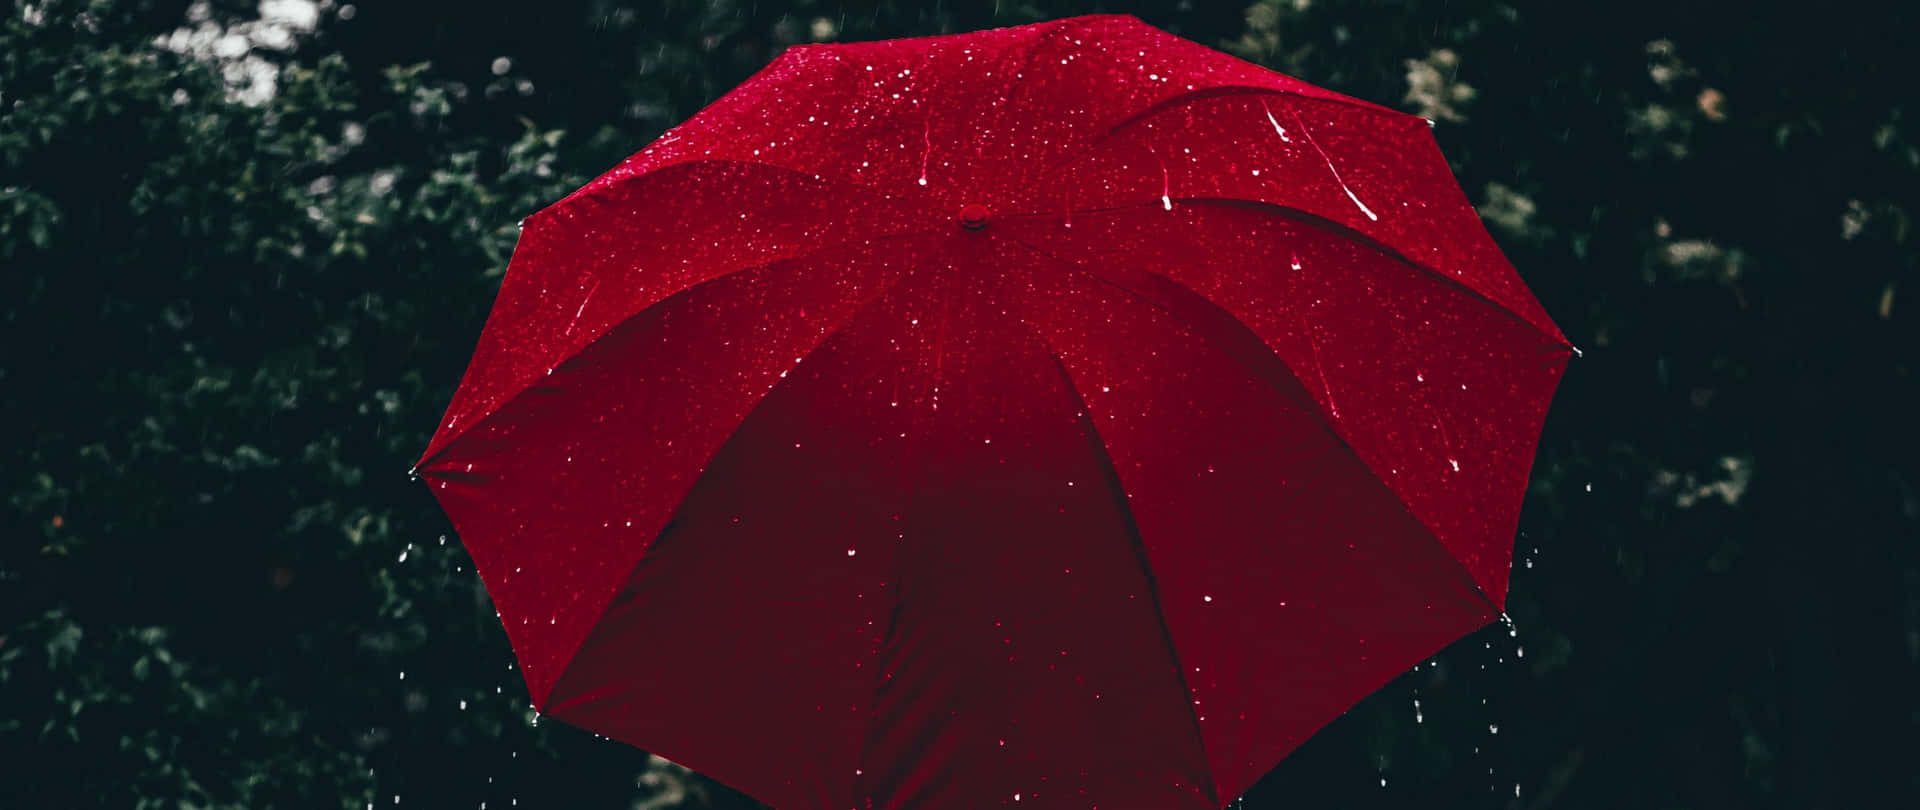 Aesthetic Red Umbrella In The Rain Wallpaper